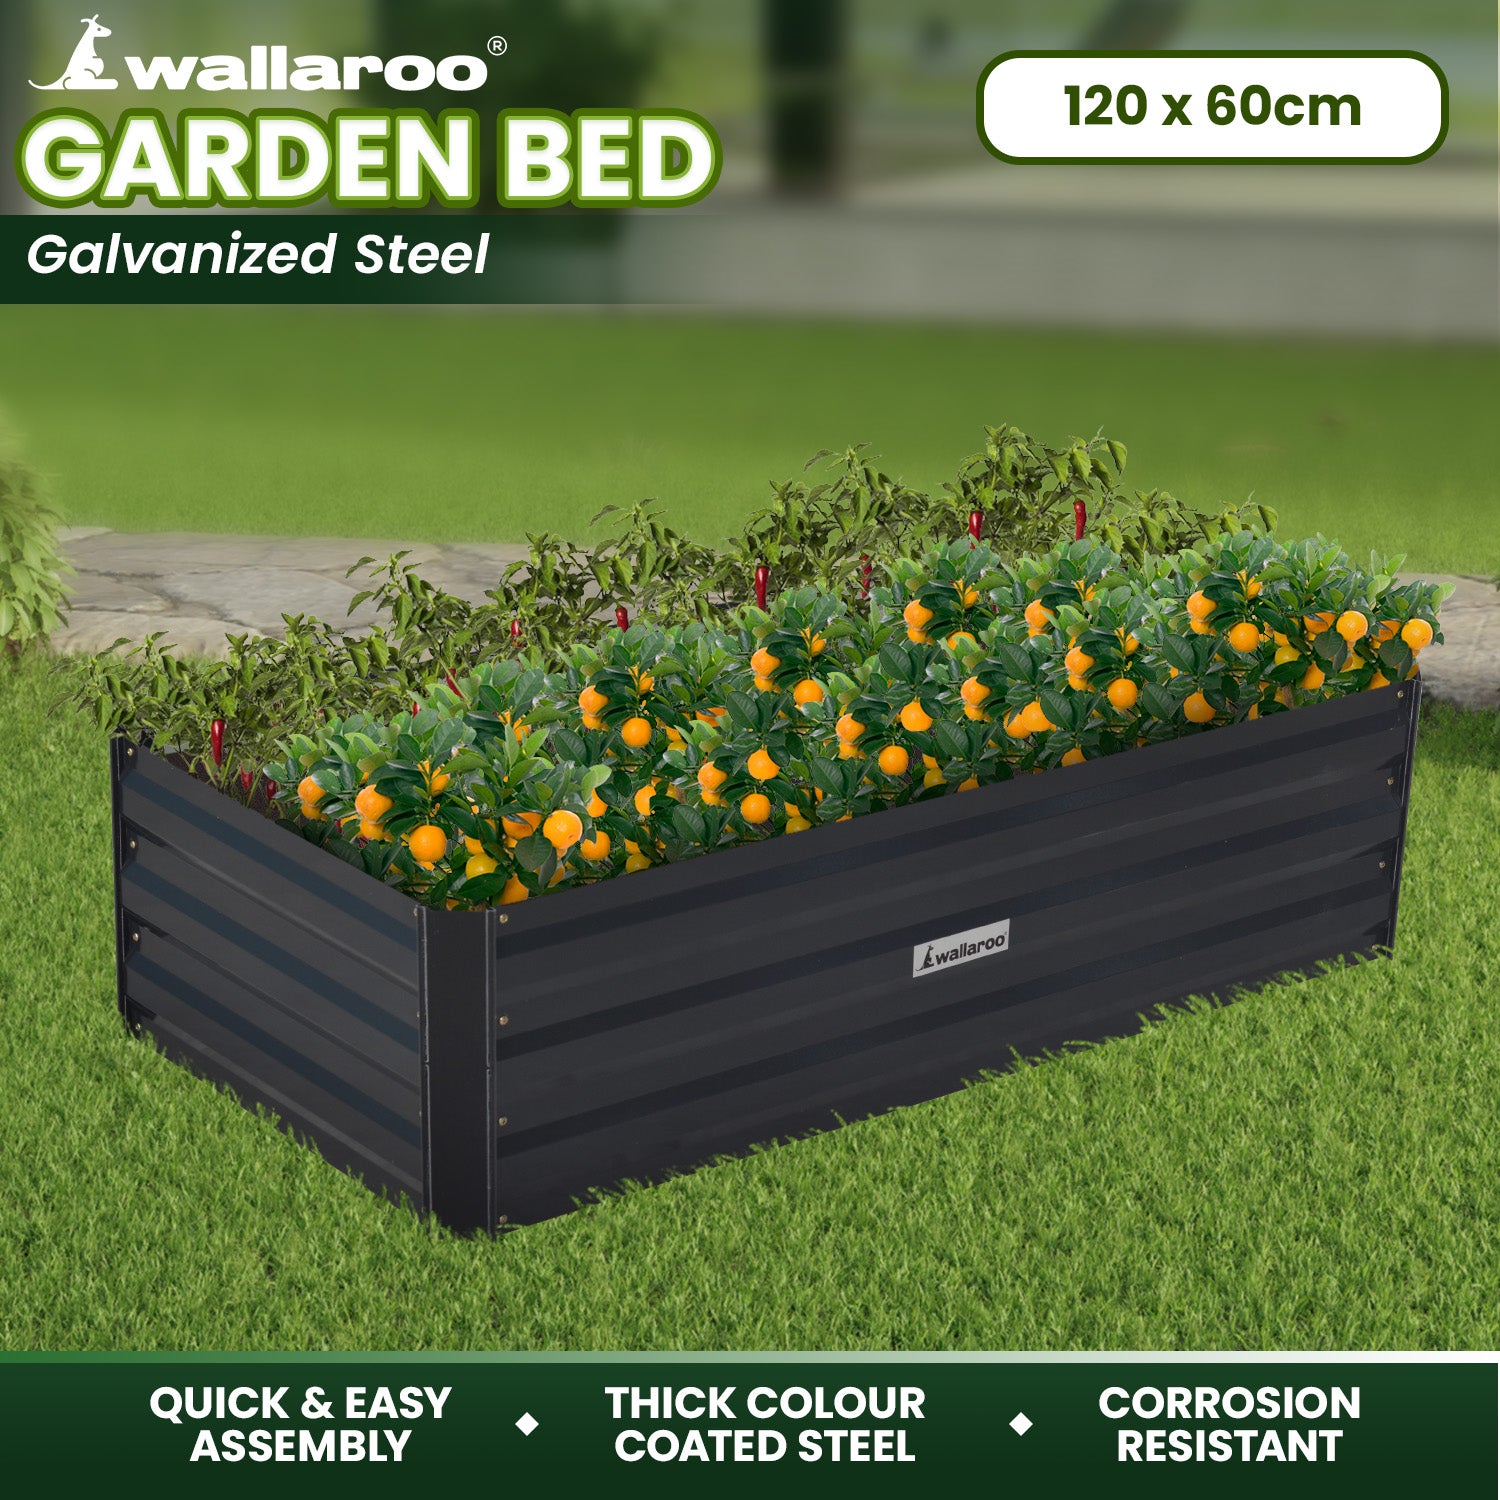 Wallaroo Garden Bed Galvanized Steel - Black 120 x 60 x 30cm